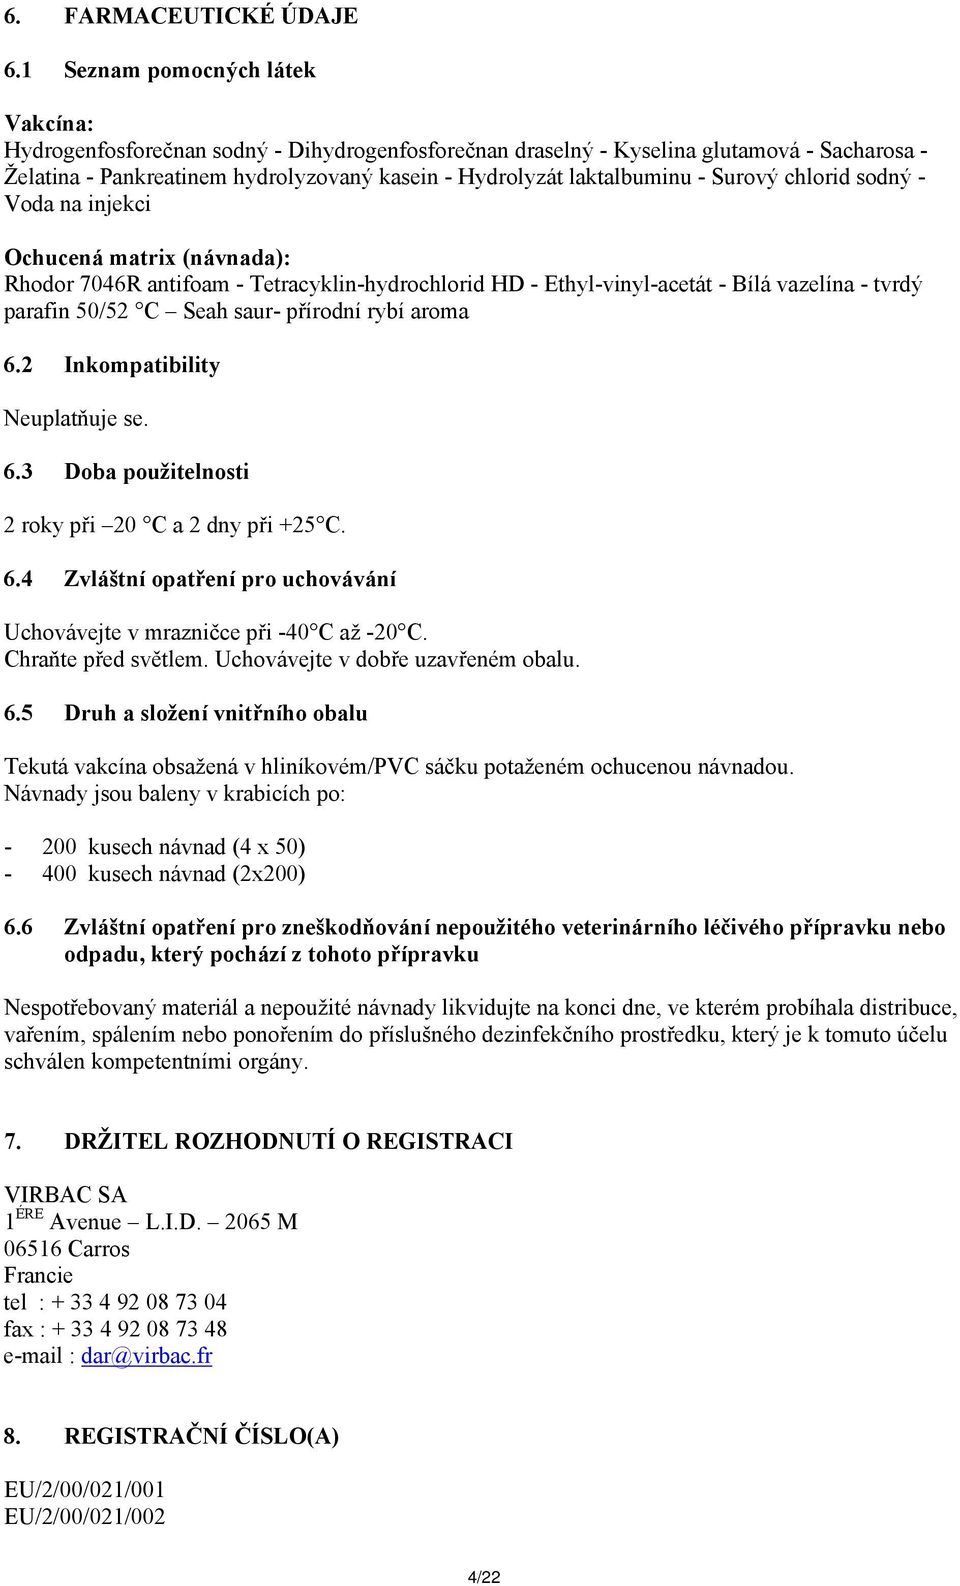 - Surový chlorid sodný - Voda na injekci Ochucená matrix (návnada): Rhodor 7046R antifoam - Tetracyklin-hydrochlorid HD - Ethyl-vinyl-acetát - Bílá vazelína - tvrdý parafin 50/52 C Seah saur-